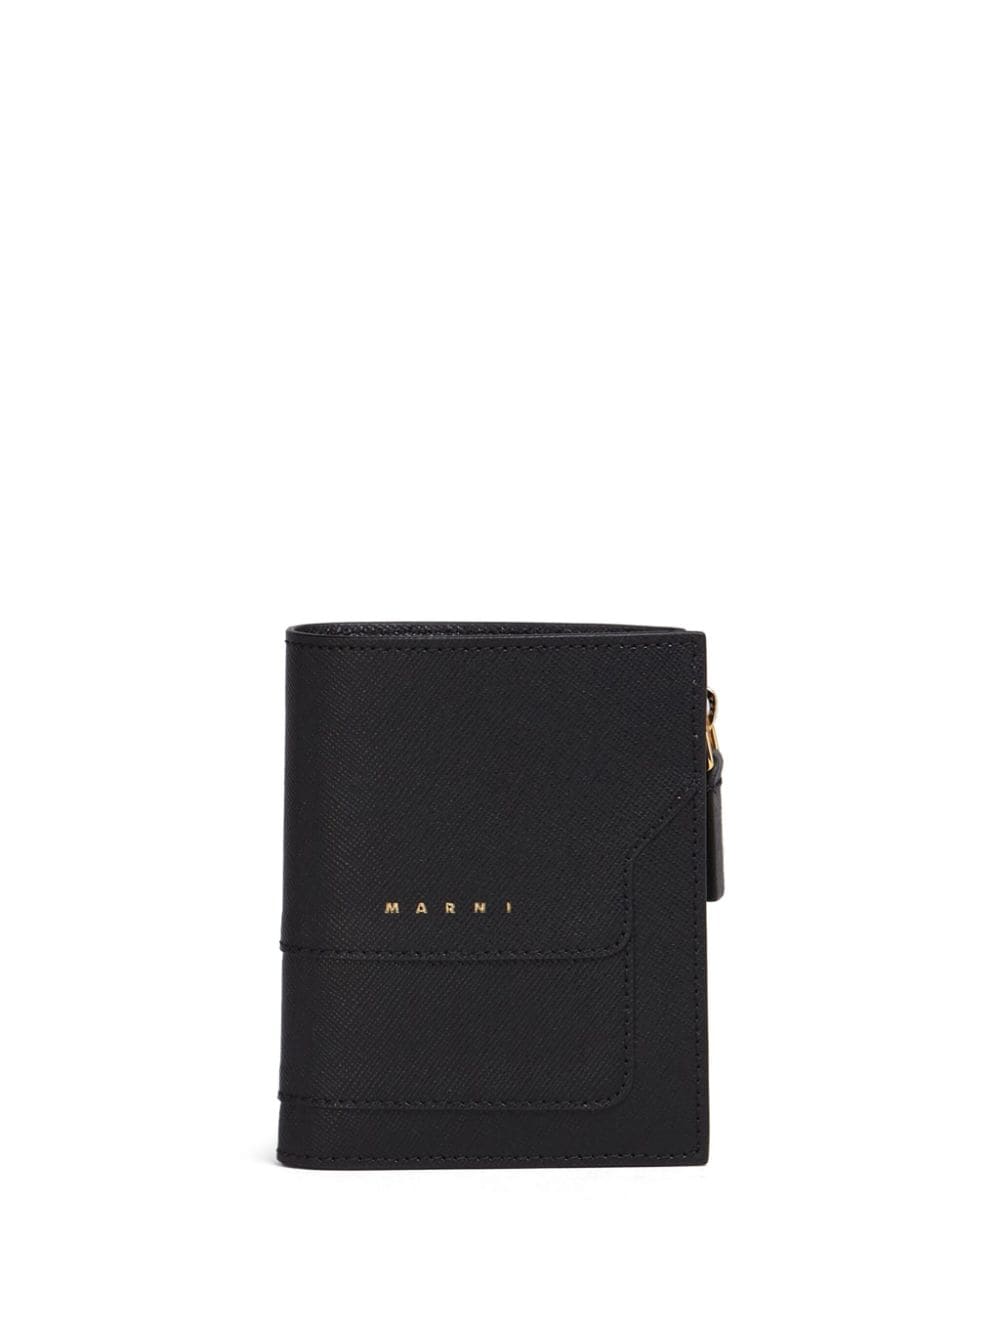 Marni bi-fold leather wallet - Black von Marni